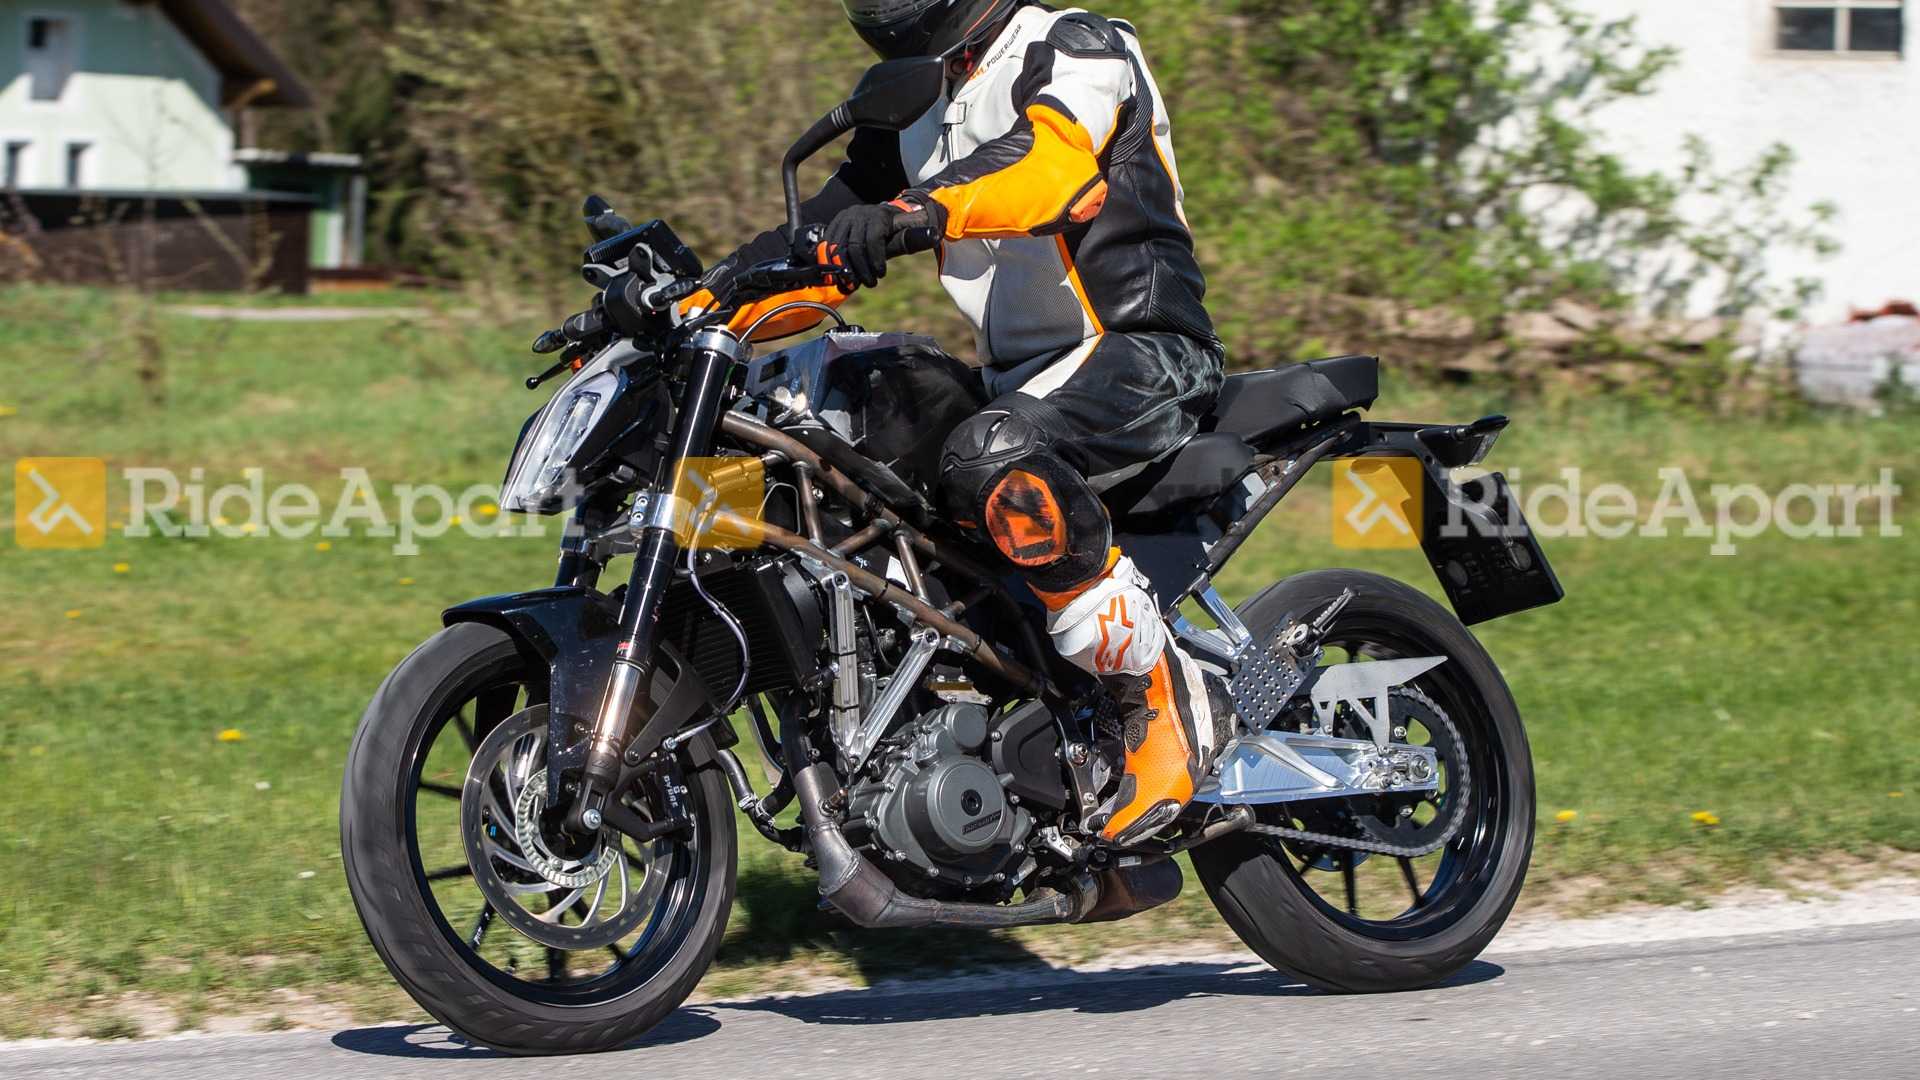 Prototype KTM 390 Duke Caught Testing - Motorcycle news, Motorcycle